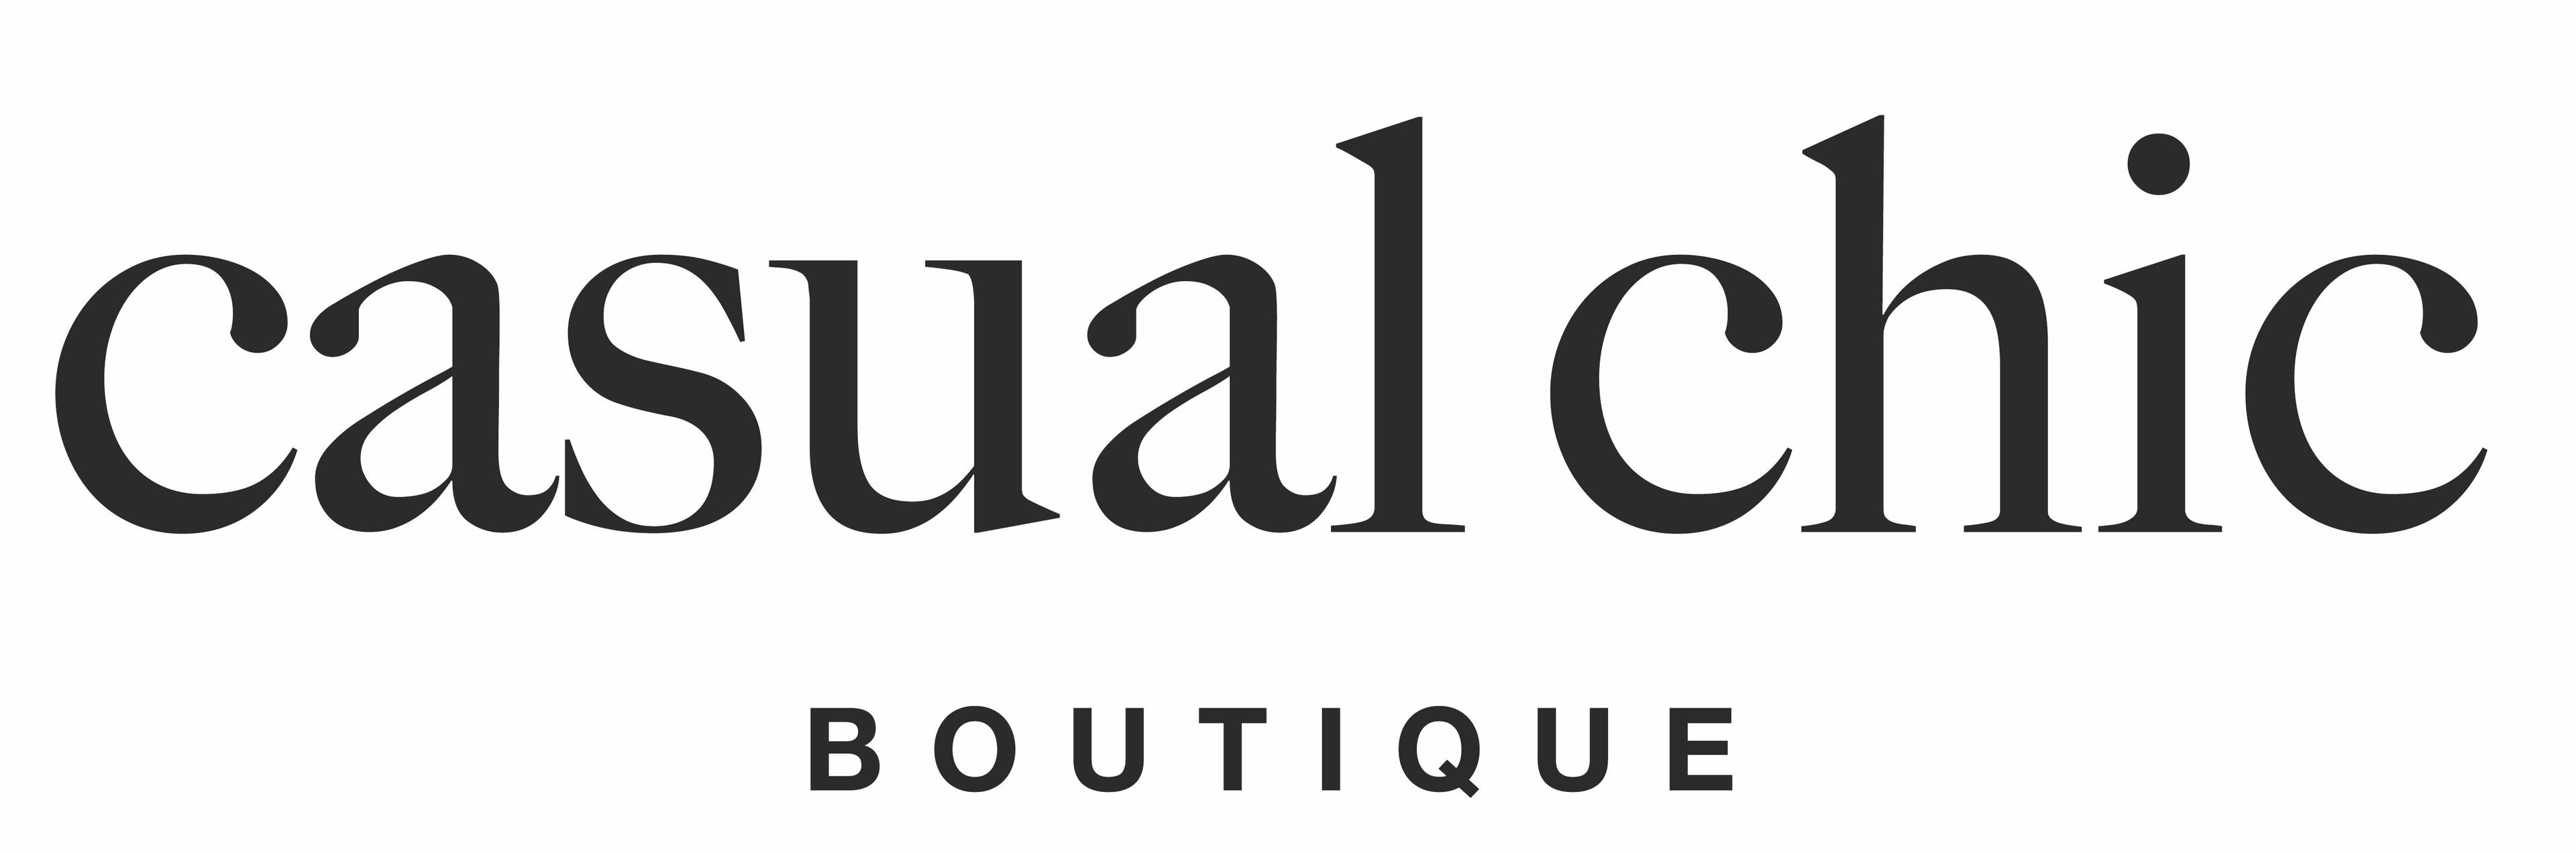 Casual Chic Boutique Help Center logo